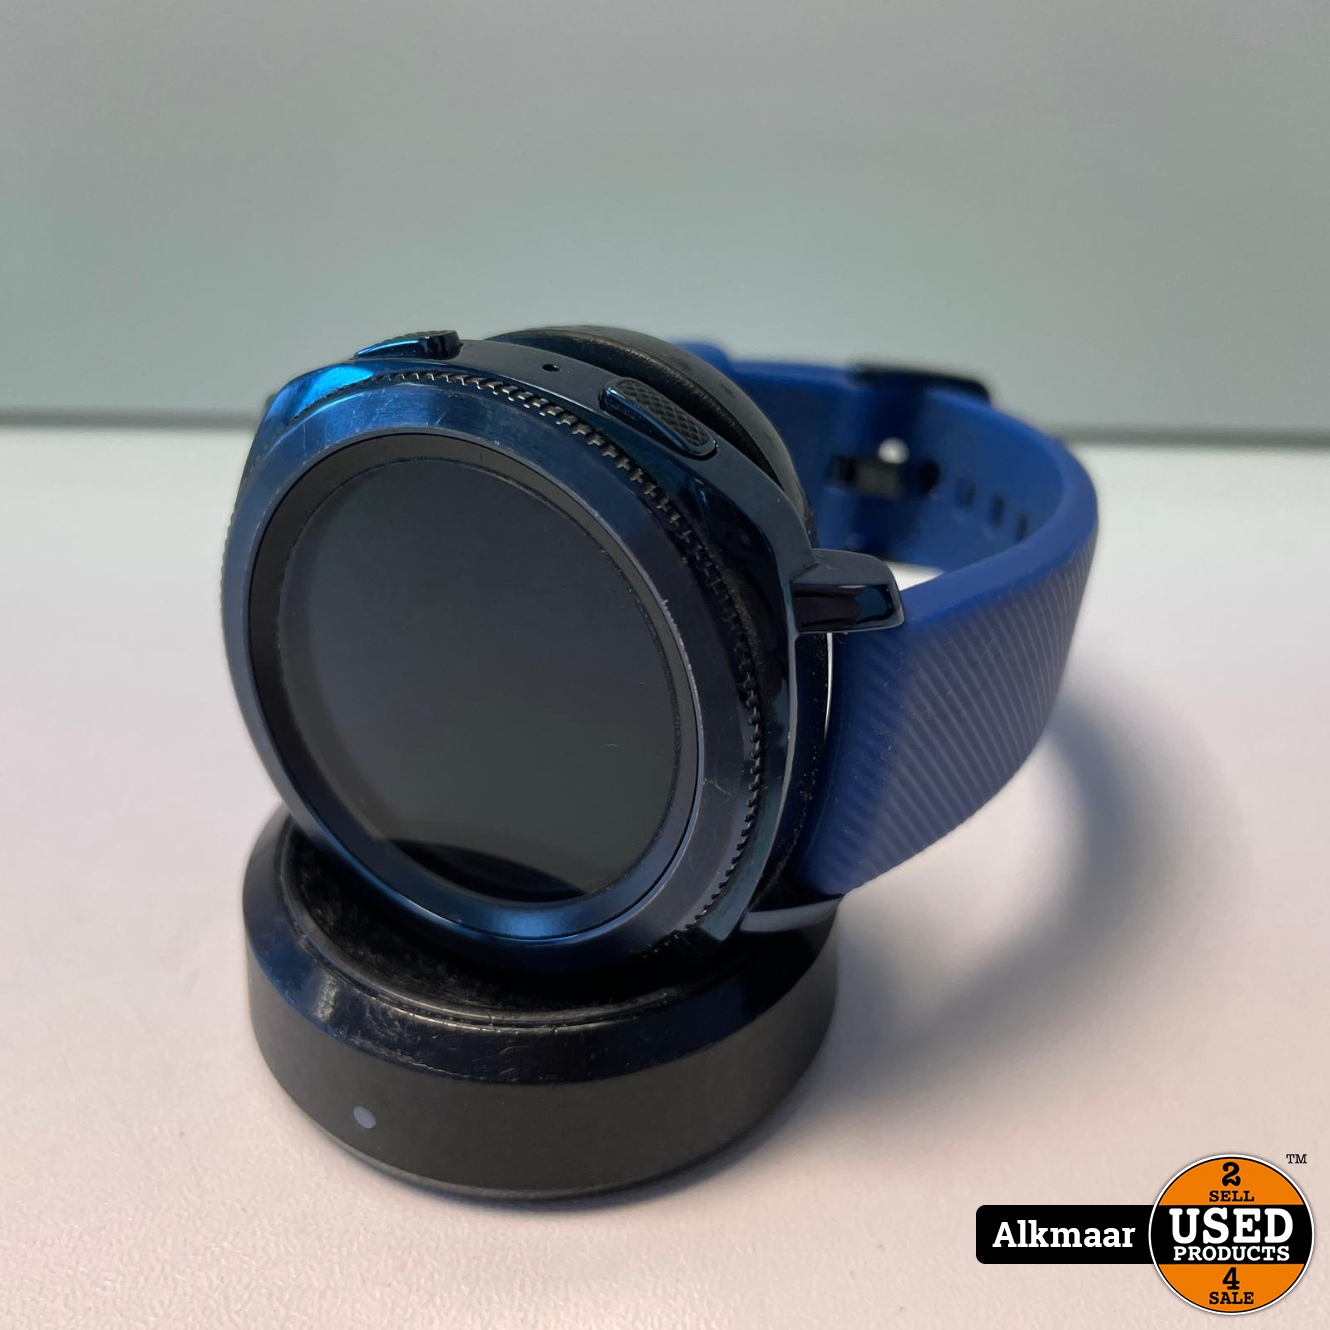 timmerman Drama verliezen Samsung Galaxy Gear Sport | Blauw band - Used Products Alkmaar